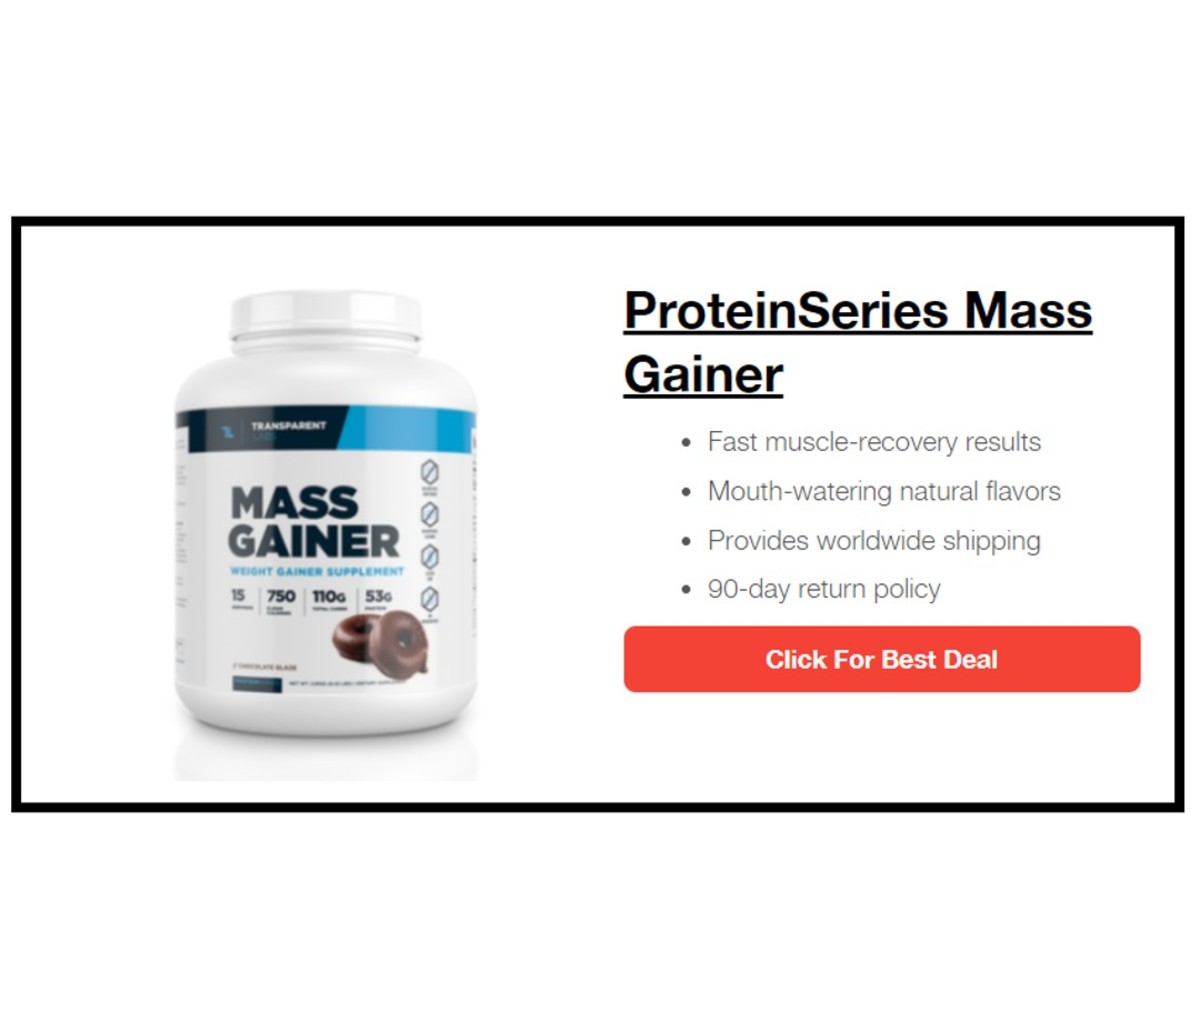 ProteinSeries Mass Gainer